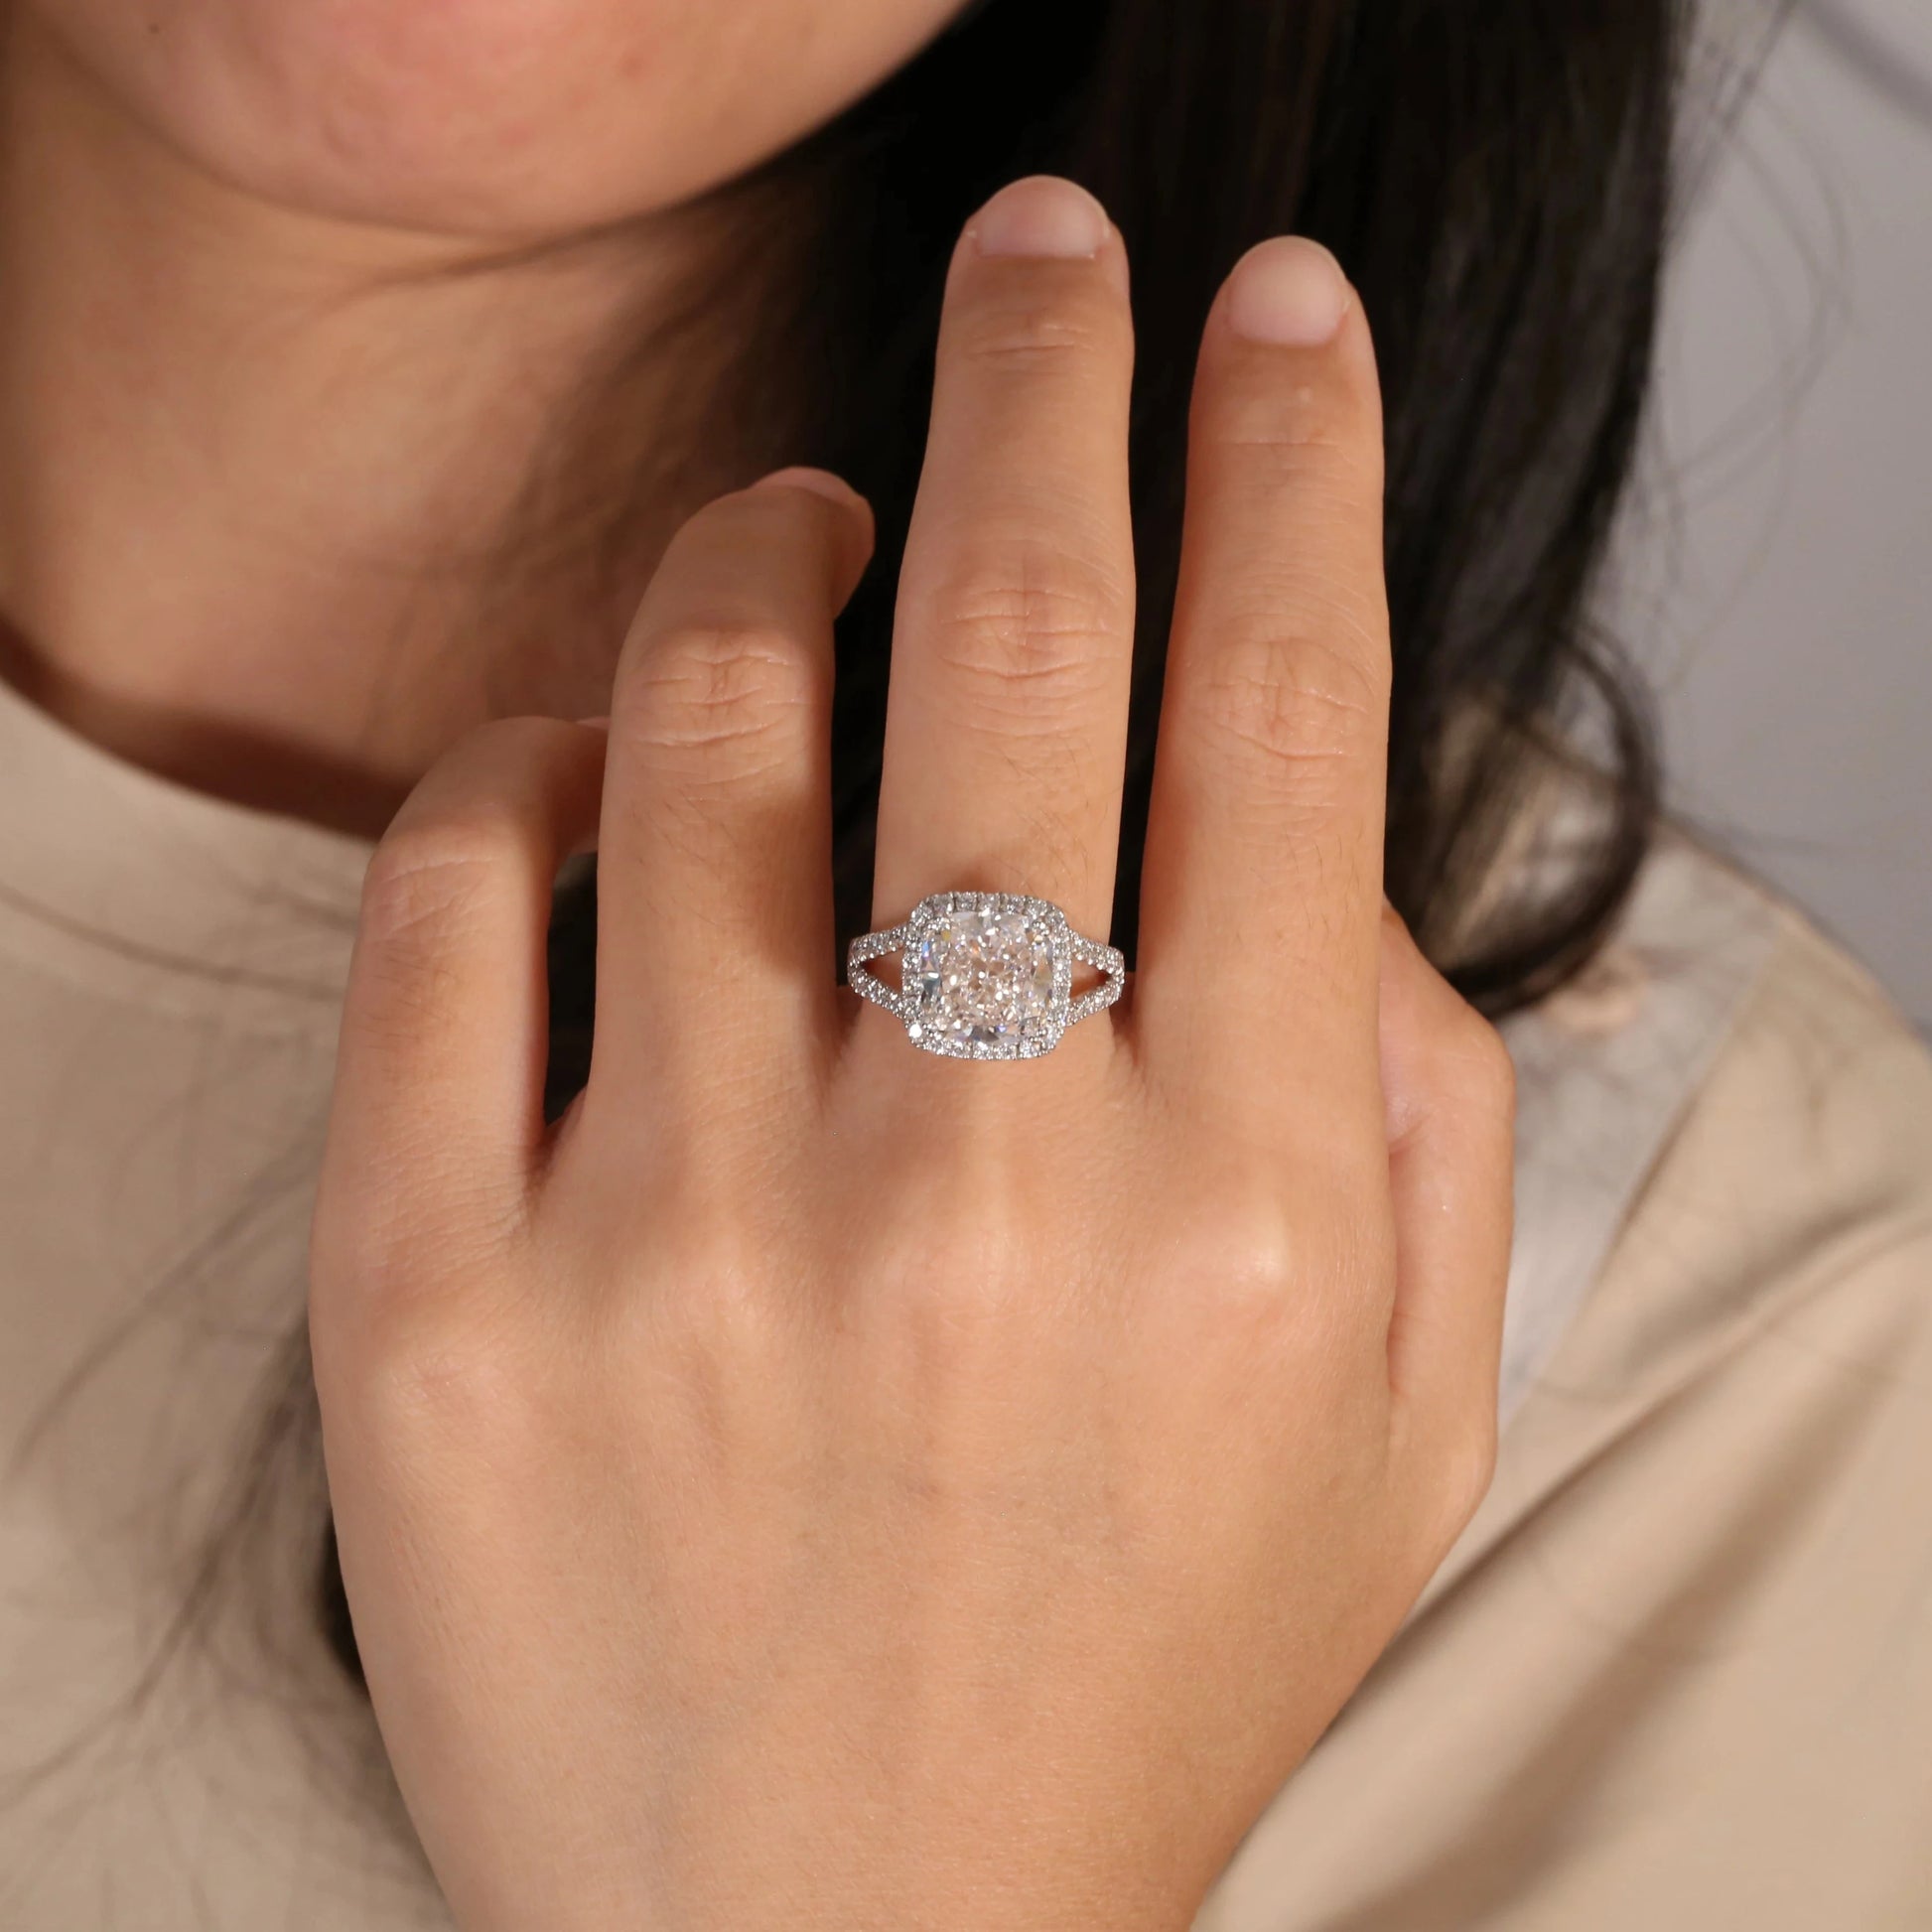 Diamond Engagement Rings. Cushion Cut. Lab-Grown Diamond - 5.62 Carat.